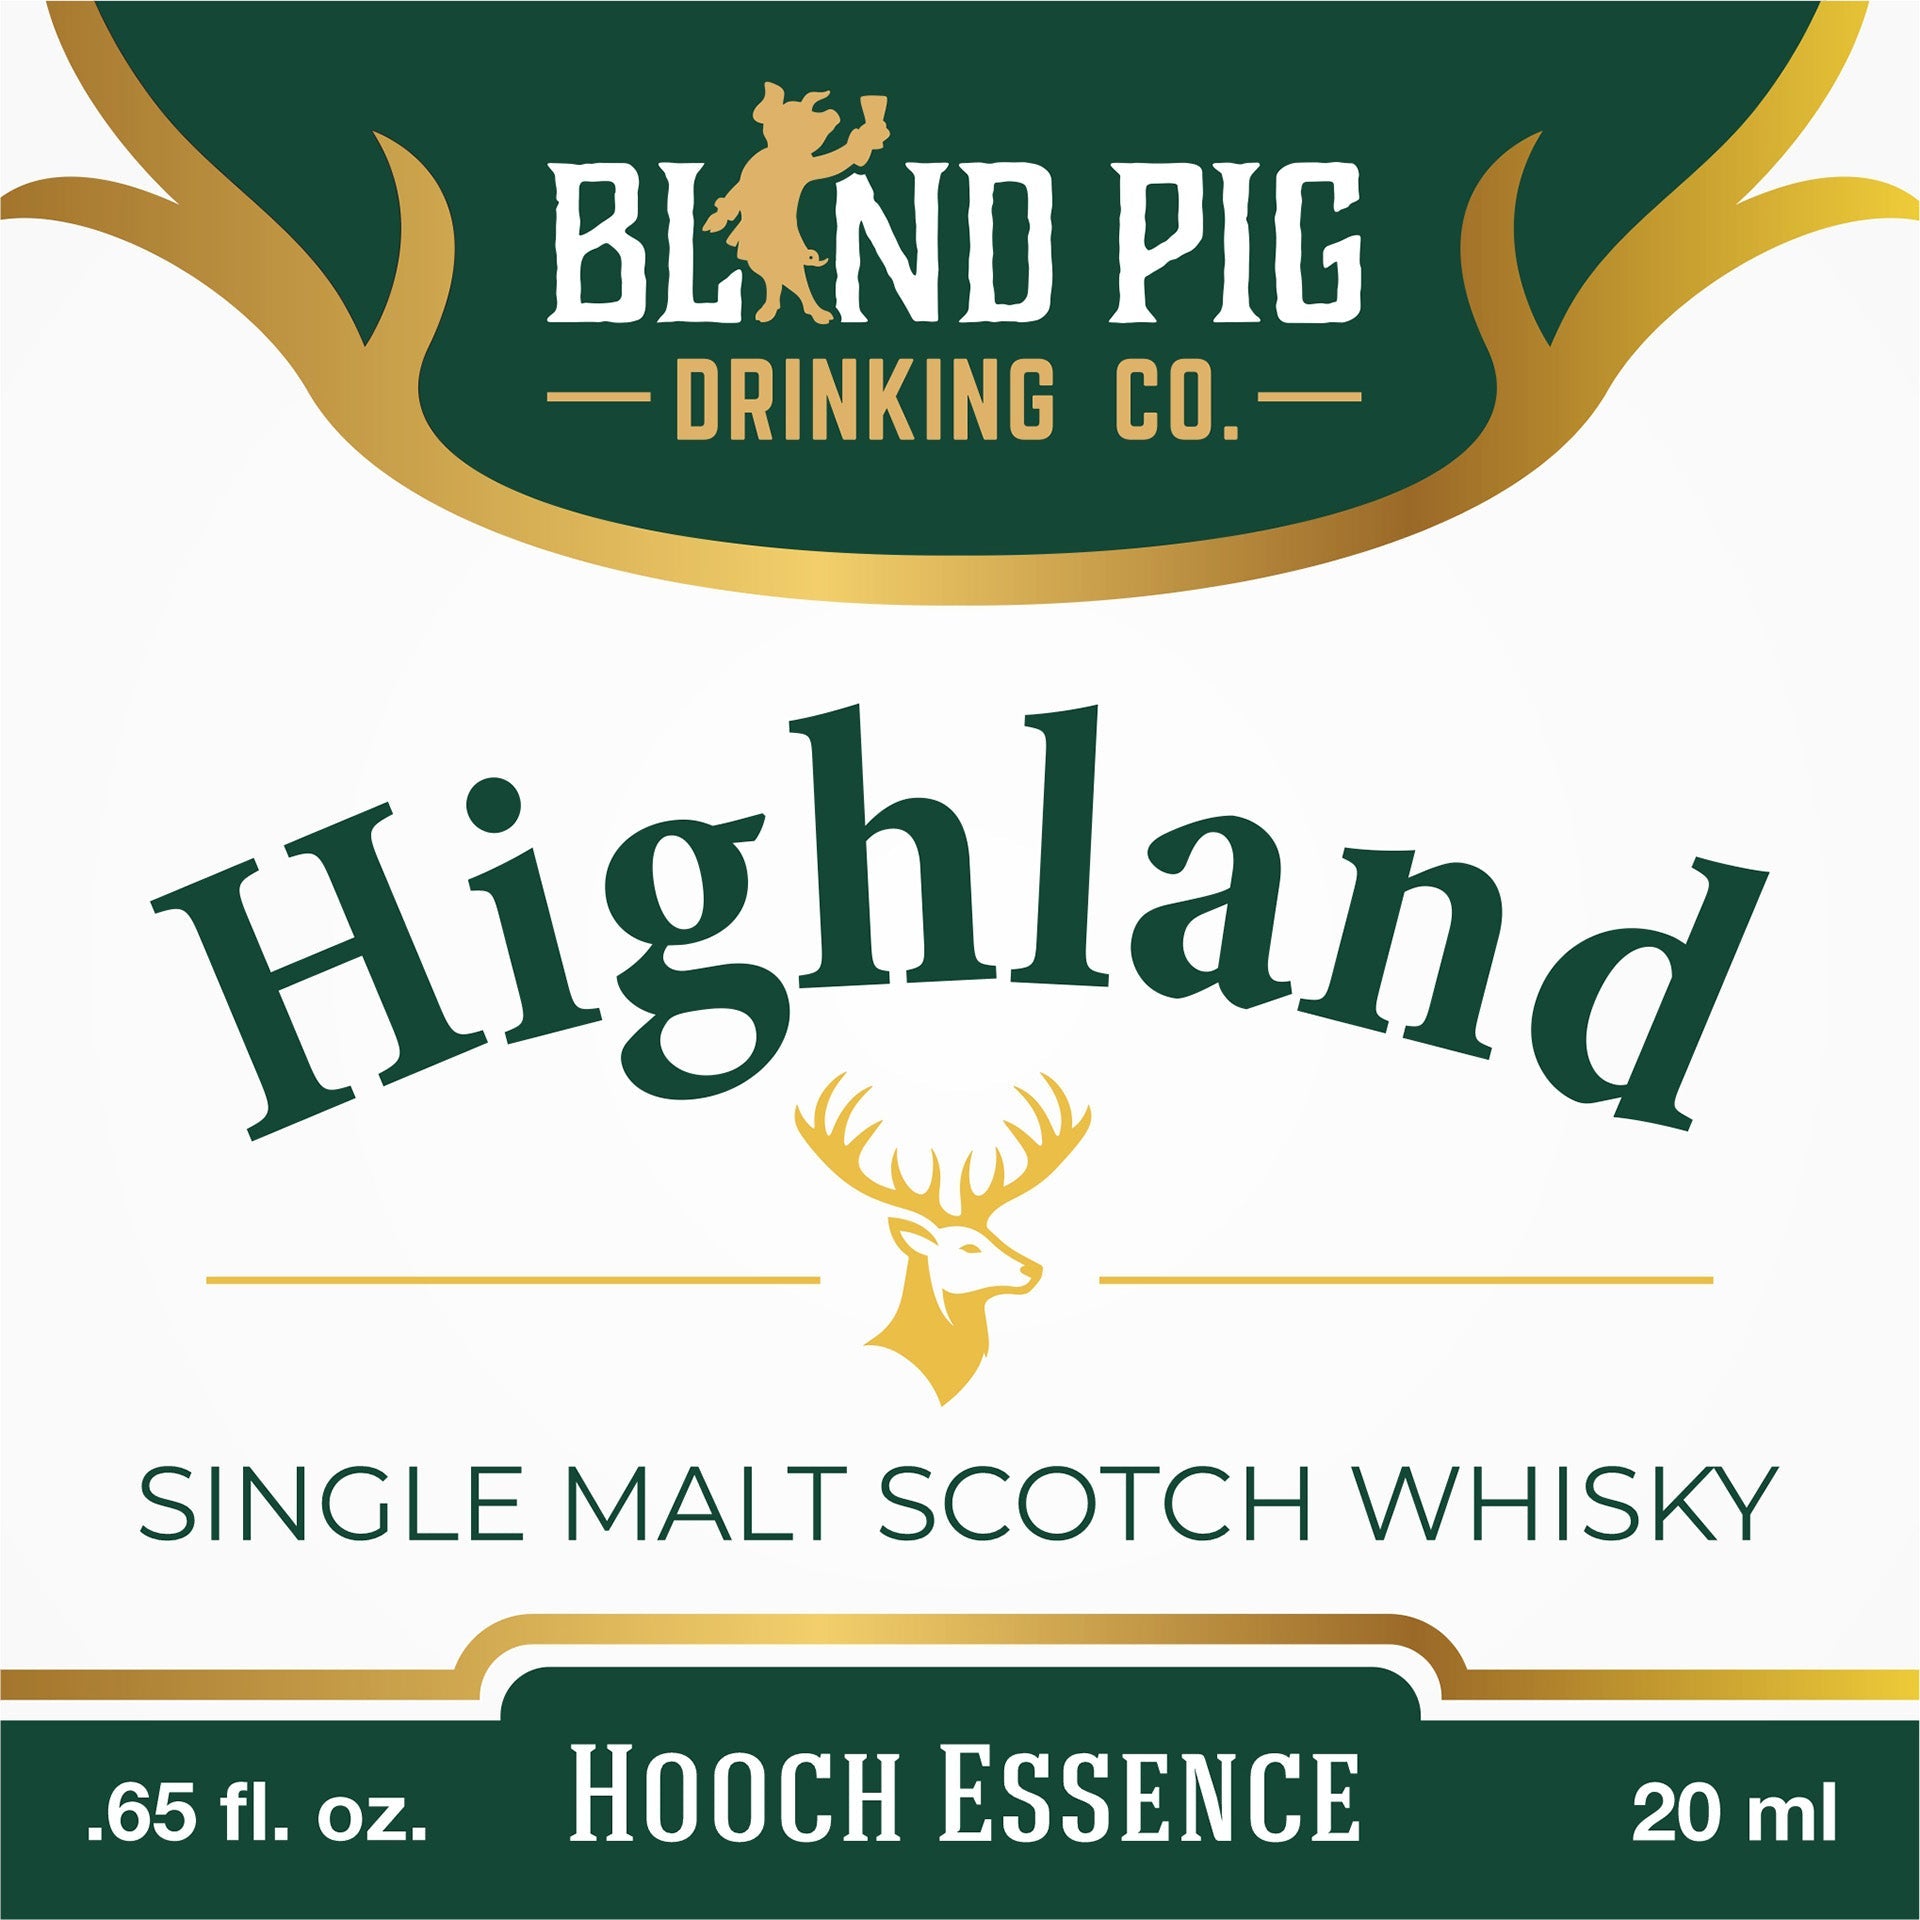 Highland Malt Scotch Whisky (Single Malt) Hooch Essence | Scotch Flavor for DIY Spirits - Blind Pig Drinking Co.